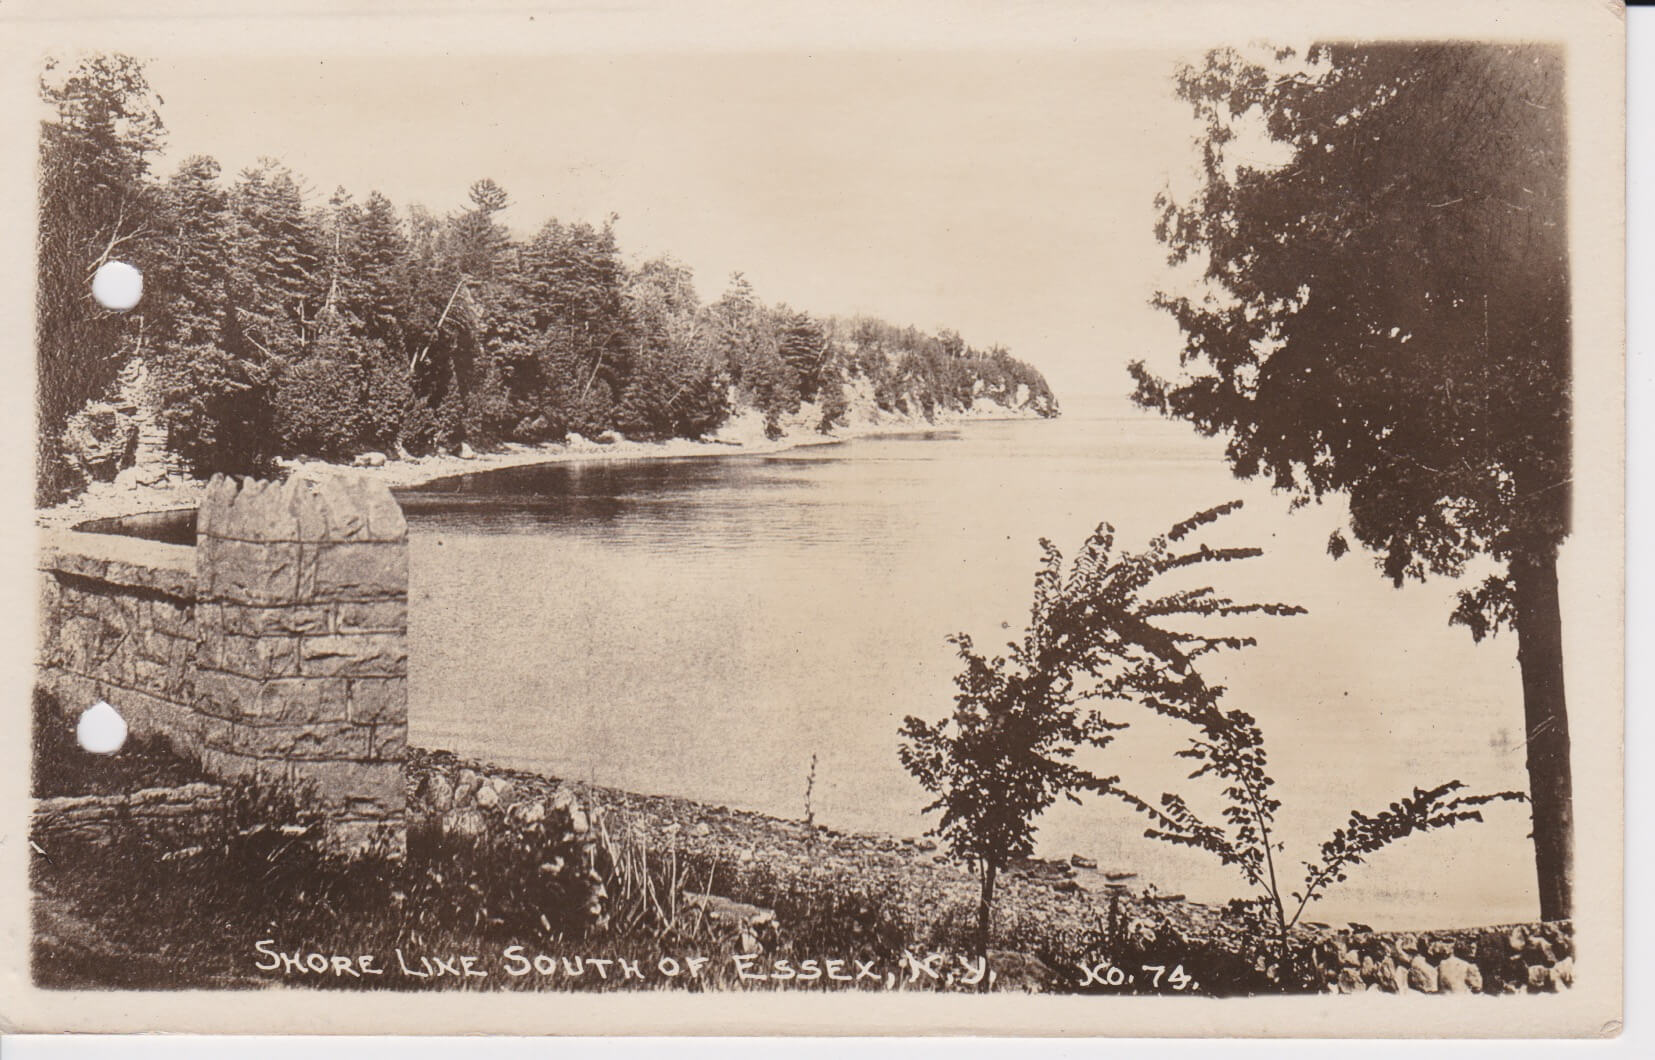 Vintage Postcard: "Shore Line South of Essex, NY."